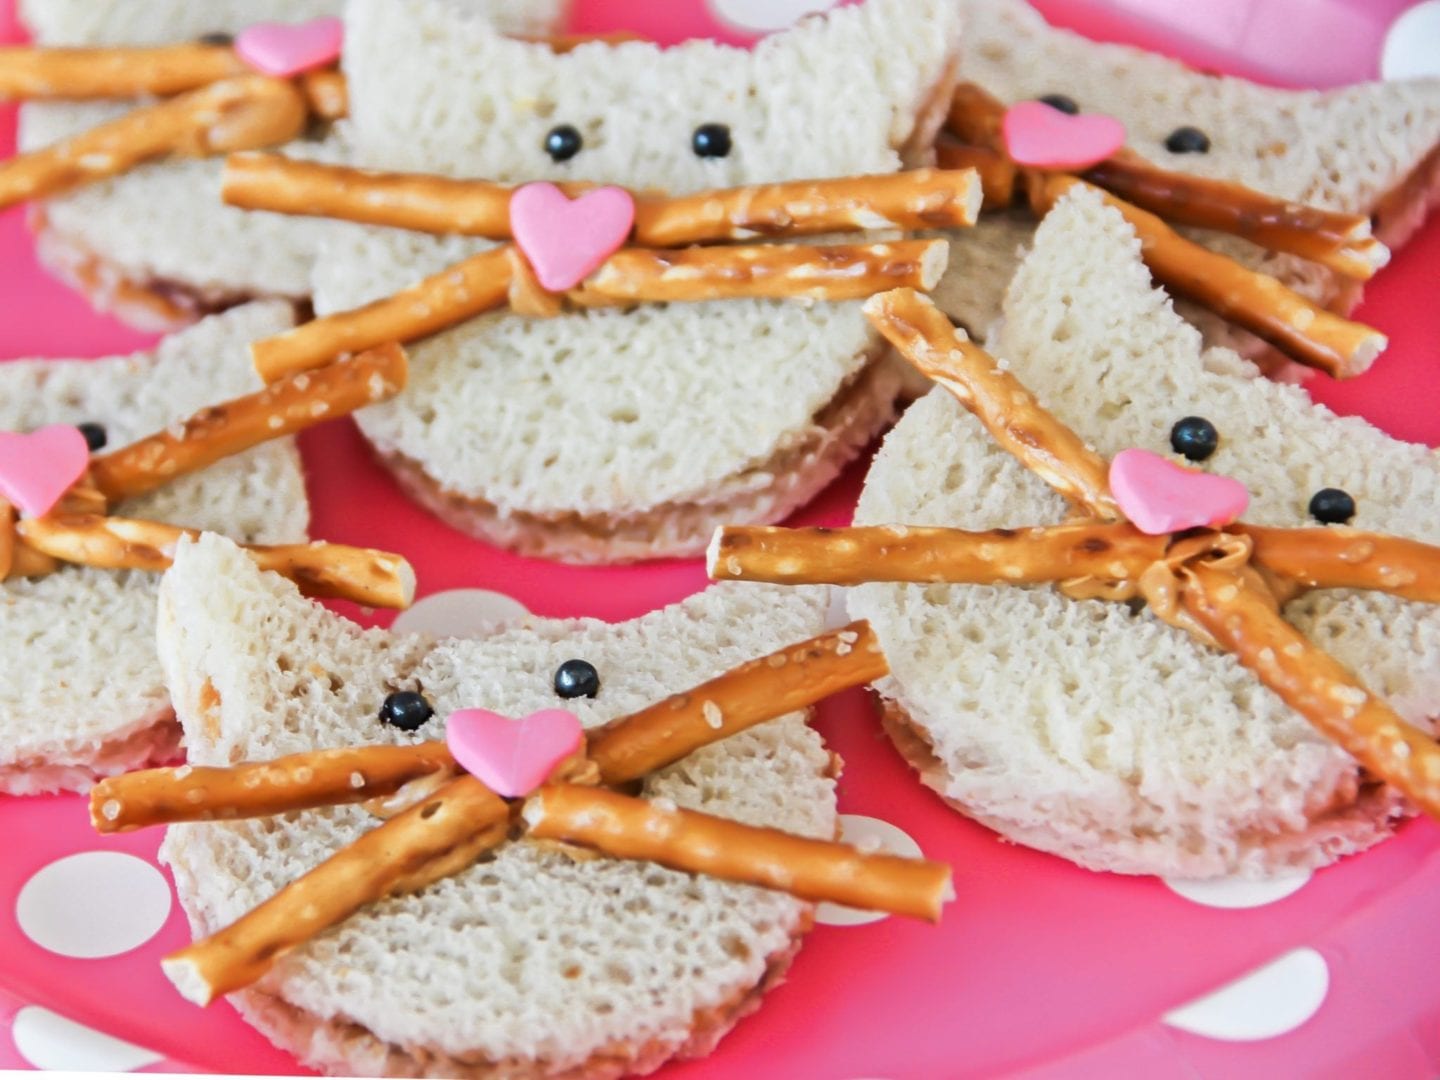 Kitten sandwiches